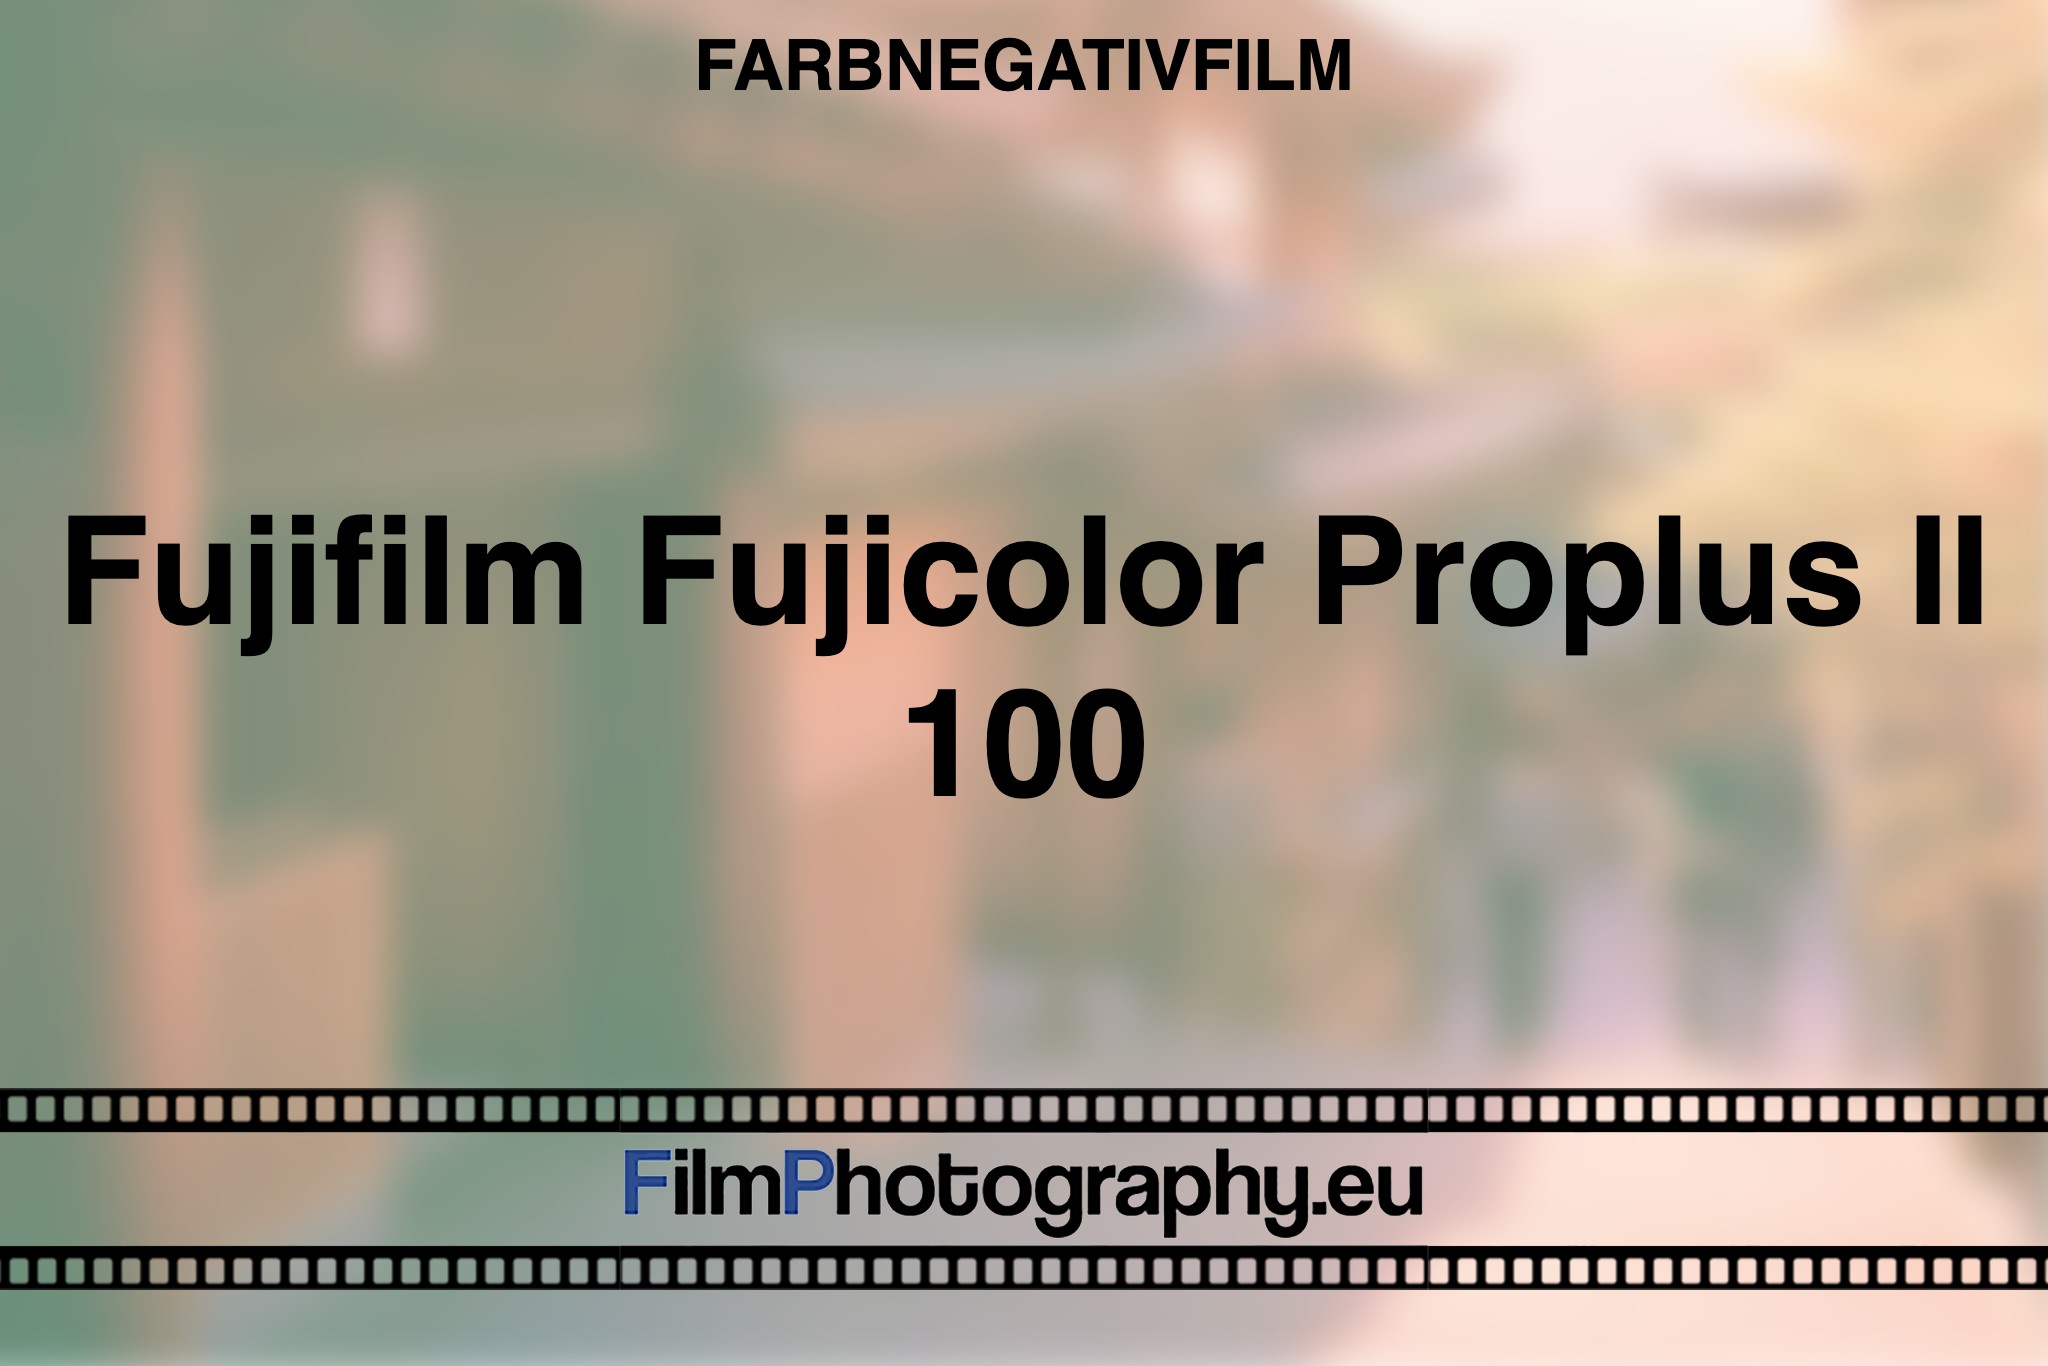 fujifilm-fujicolor-proplus-ii-100-farbnegativfilm-bnv